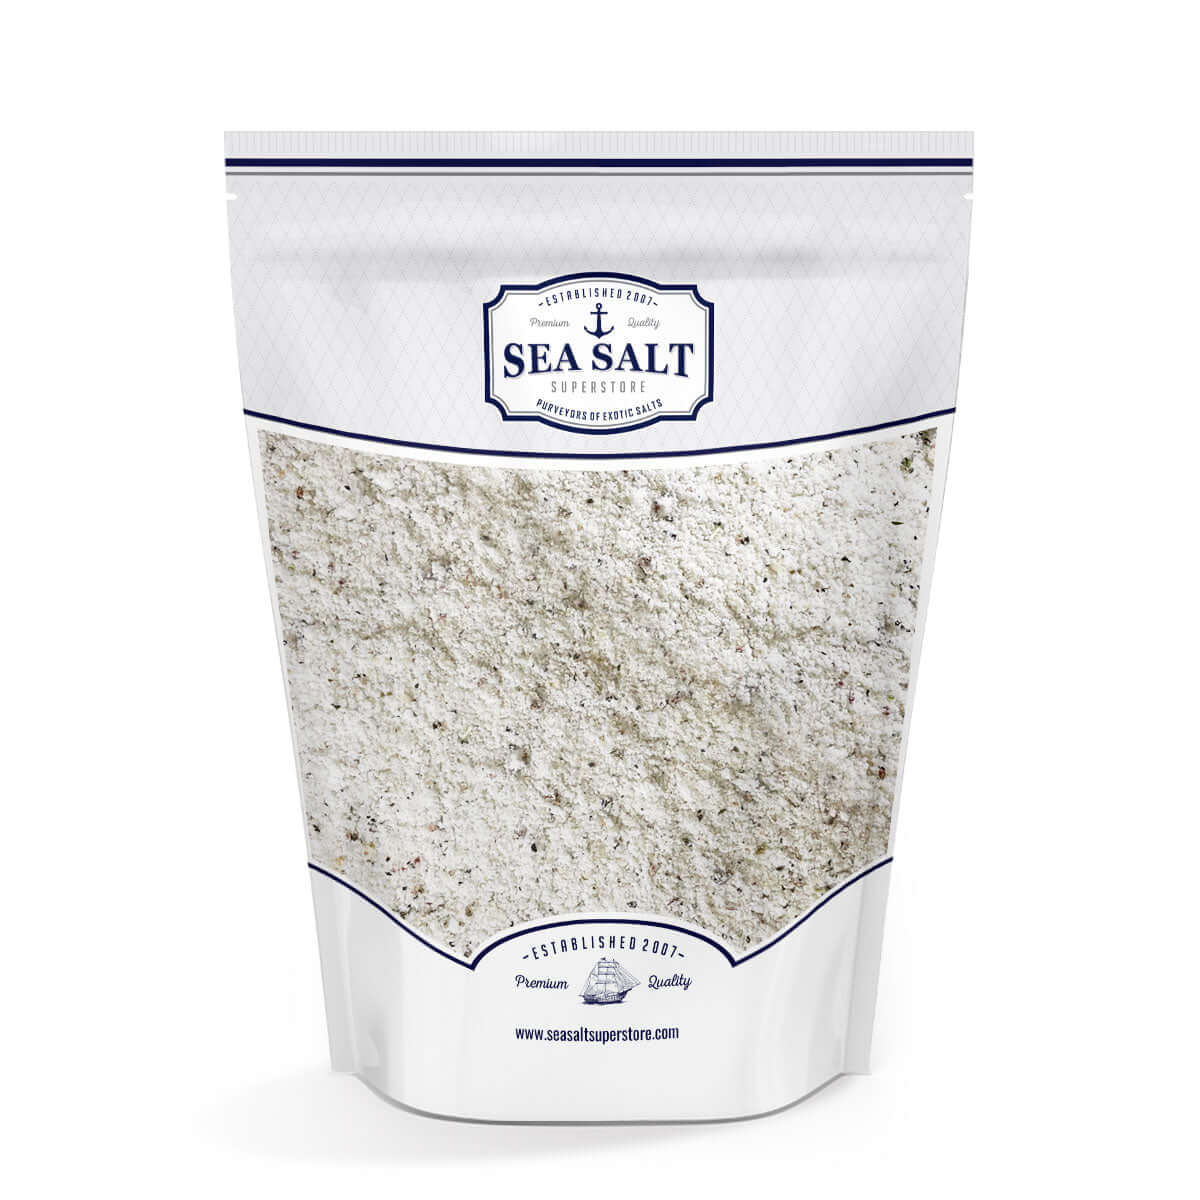 French Garden Blend Sea Salt by Sea Salt Superstore - 40 lbs Finishing Salts